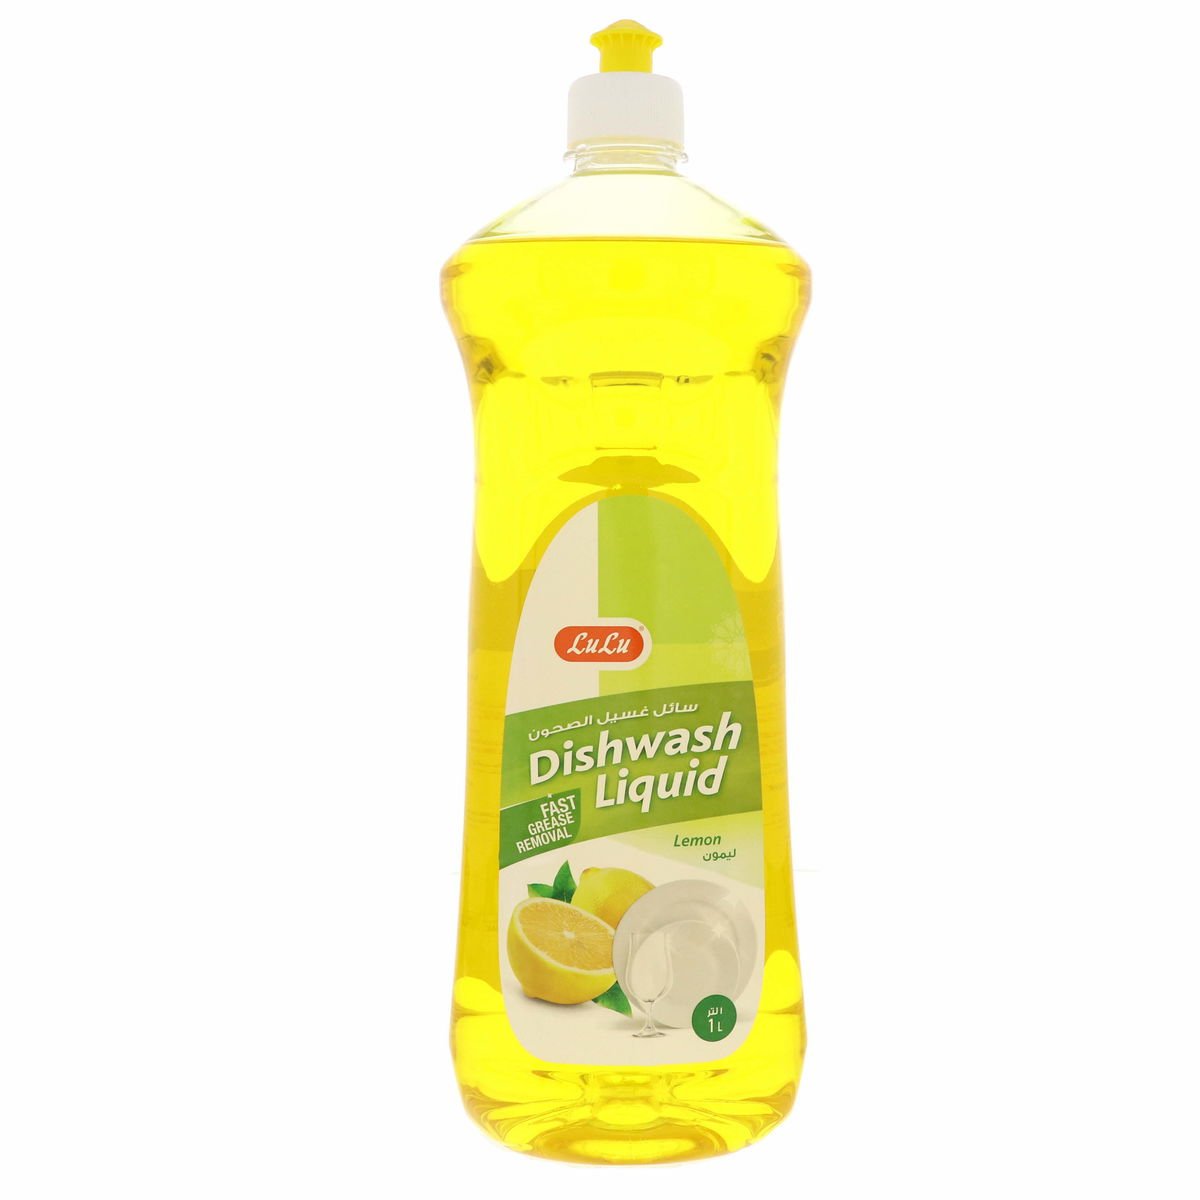 LuLu Dishwashing Liquid Lemon 1 Litre